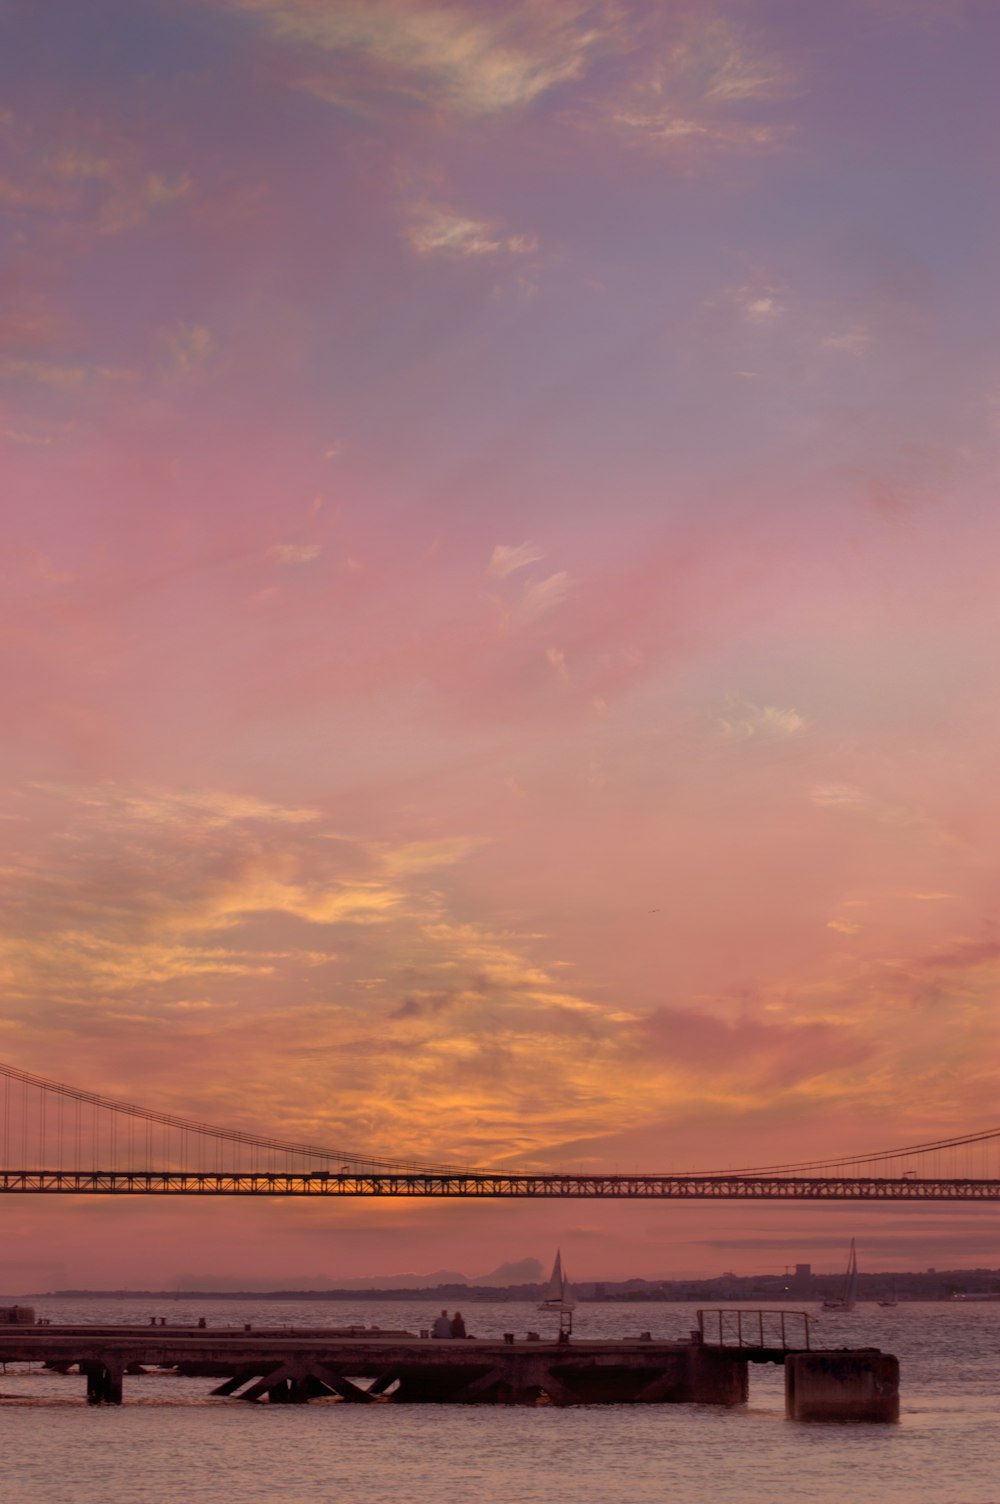 bridge under cloudy sky during sunset